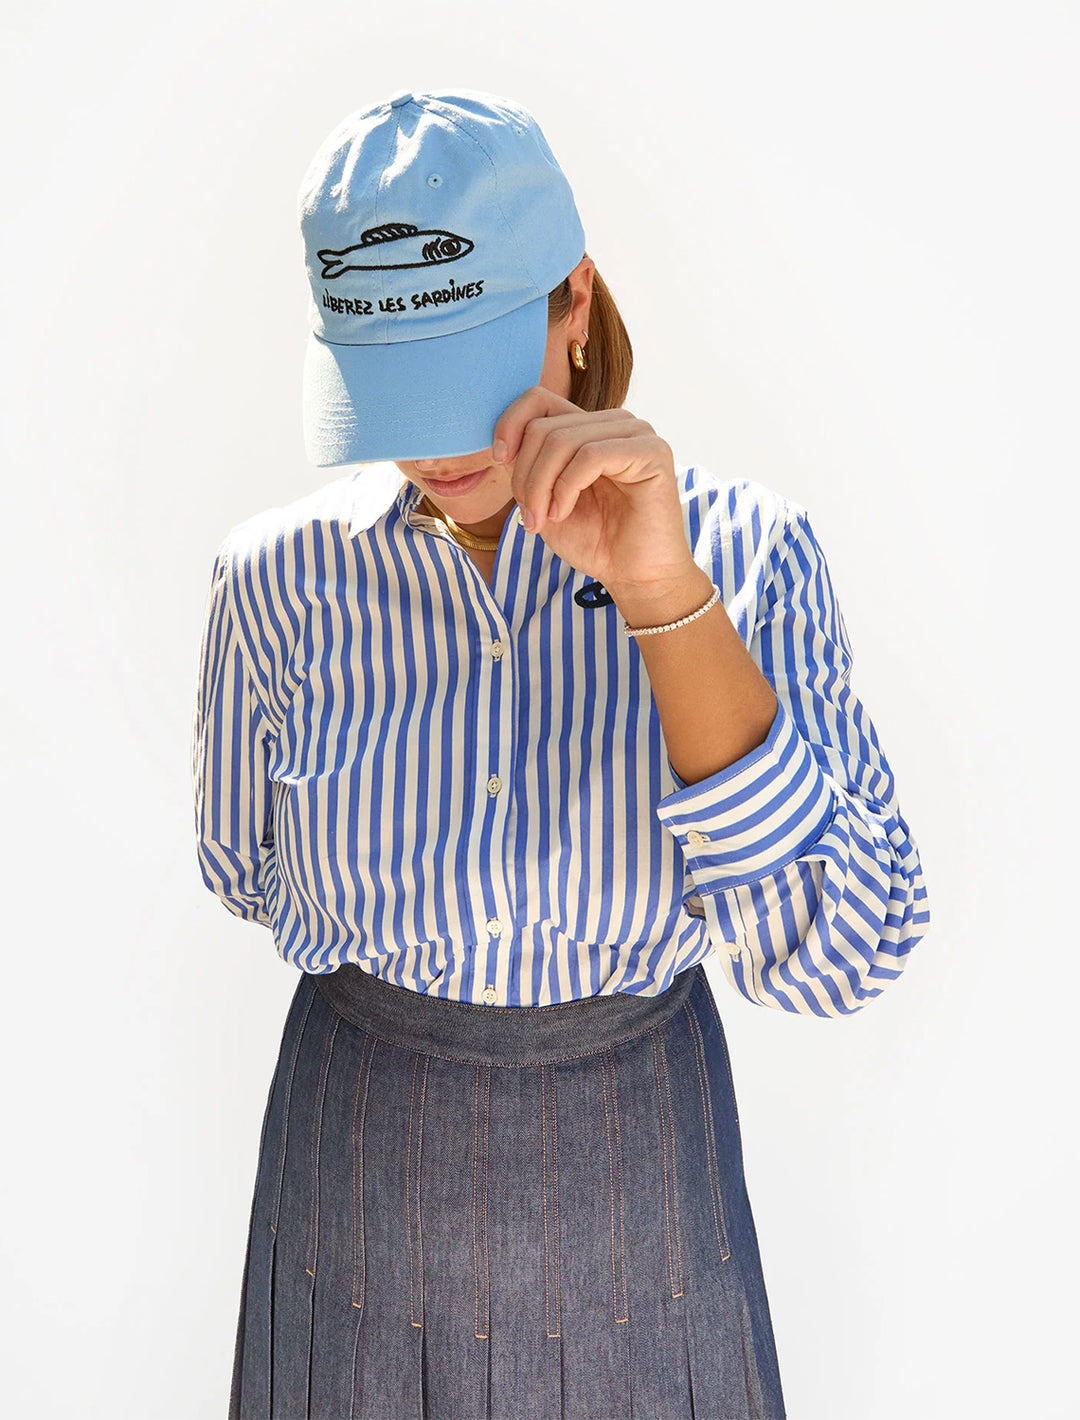 model wearing liberez les sardines sky blue baseball hat